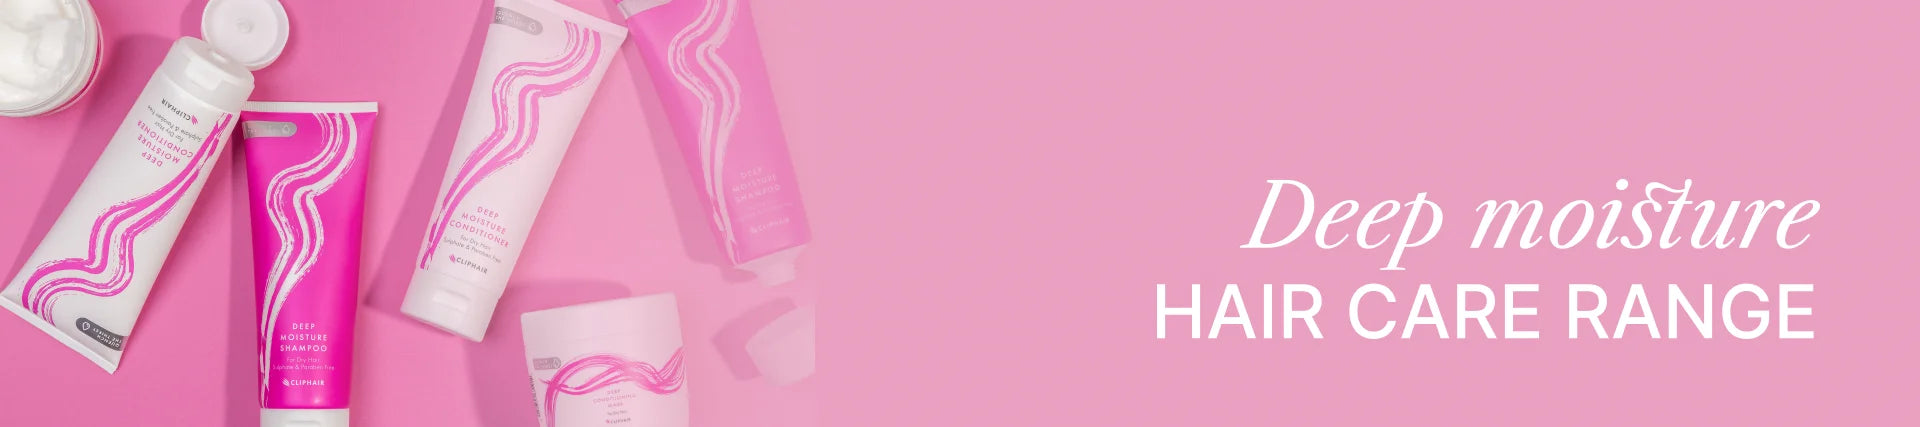 deep moisture hair care range desktop banner